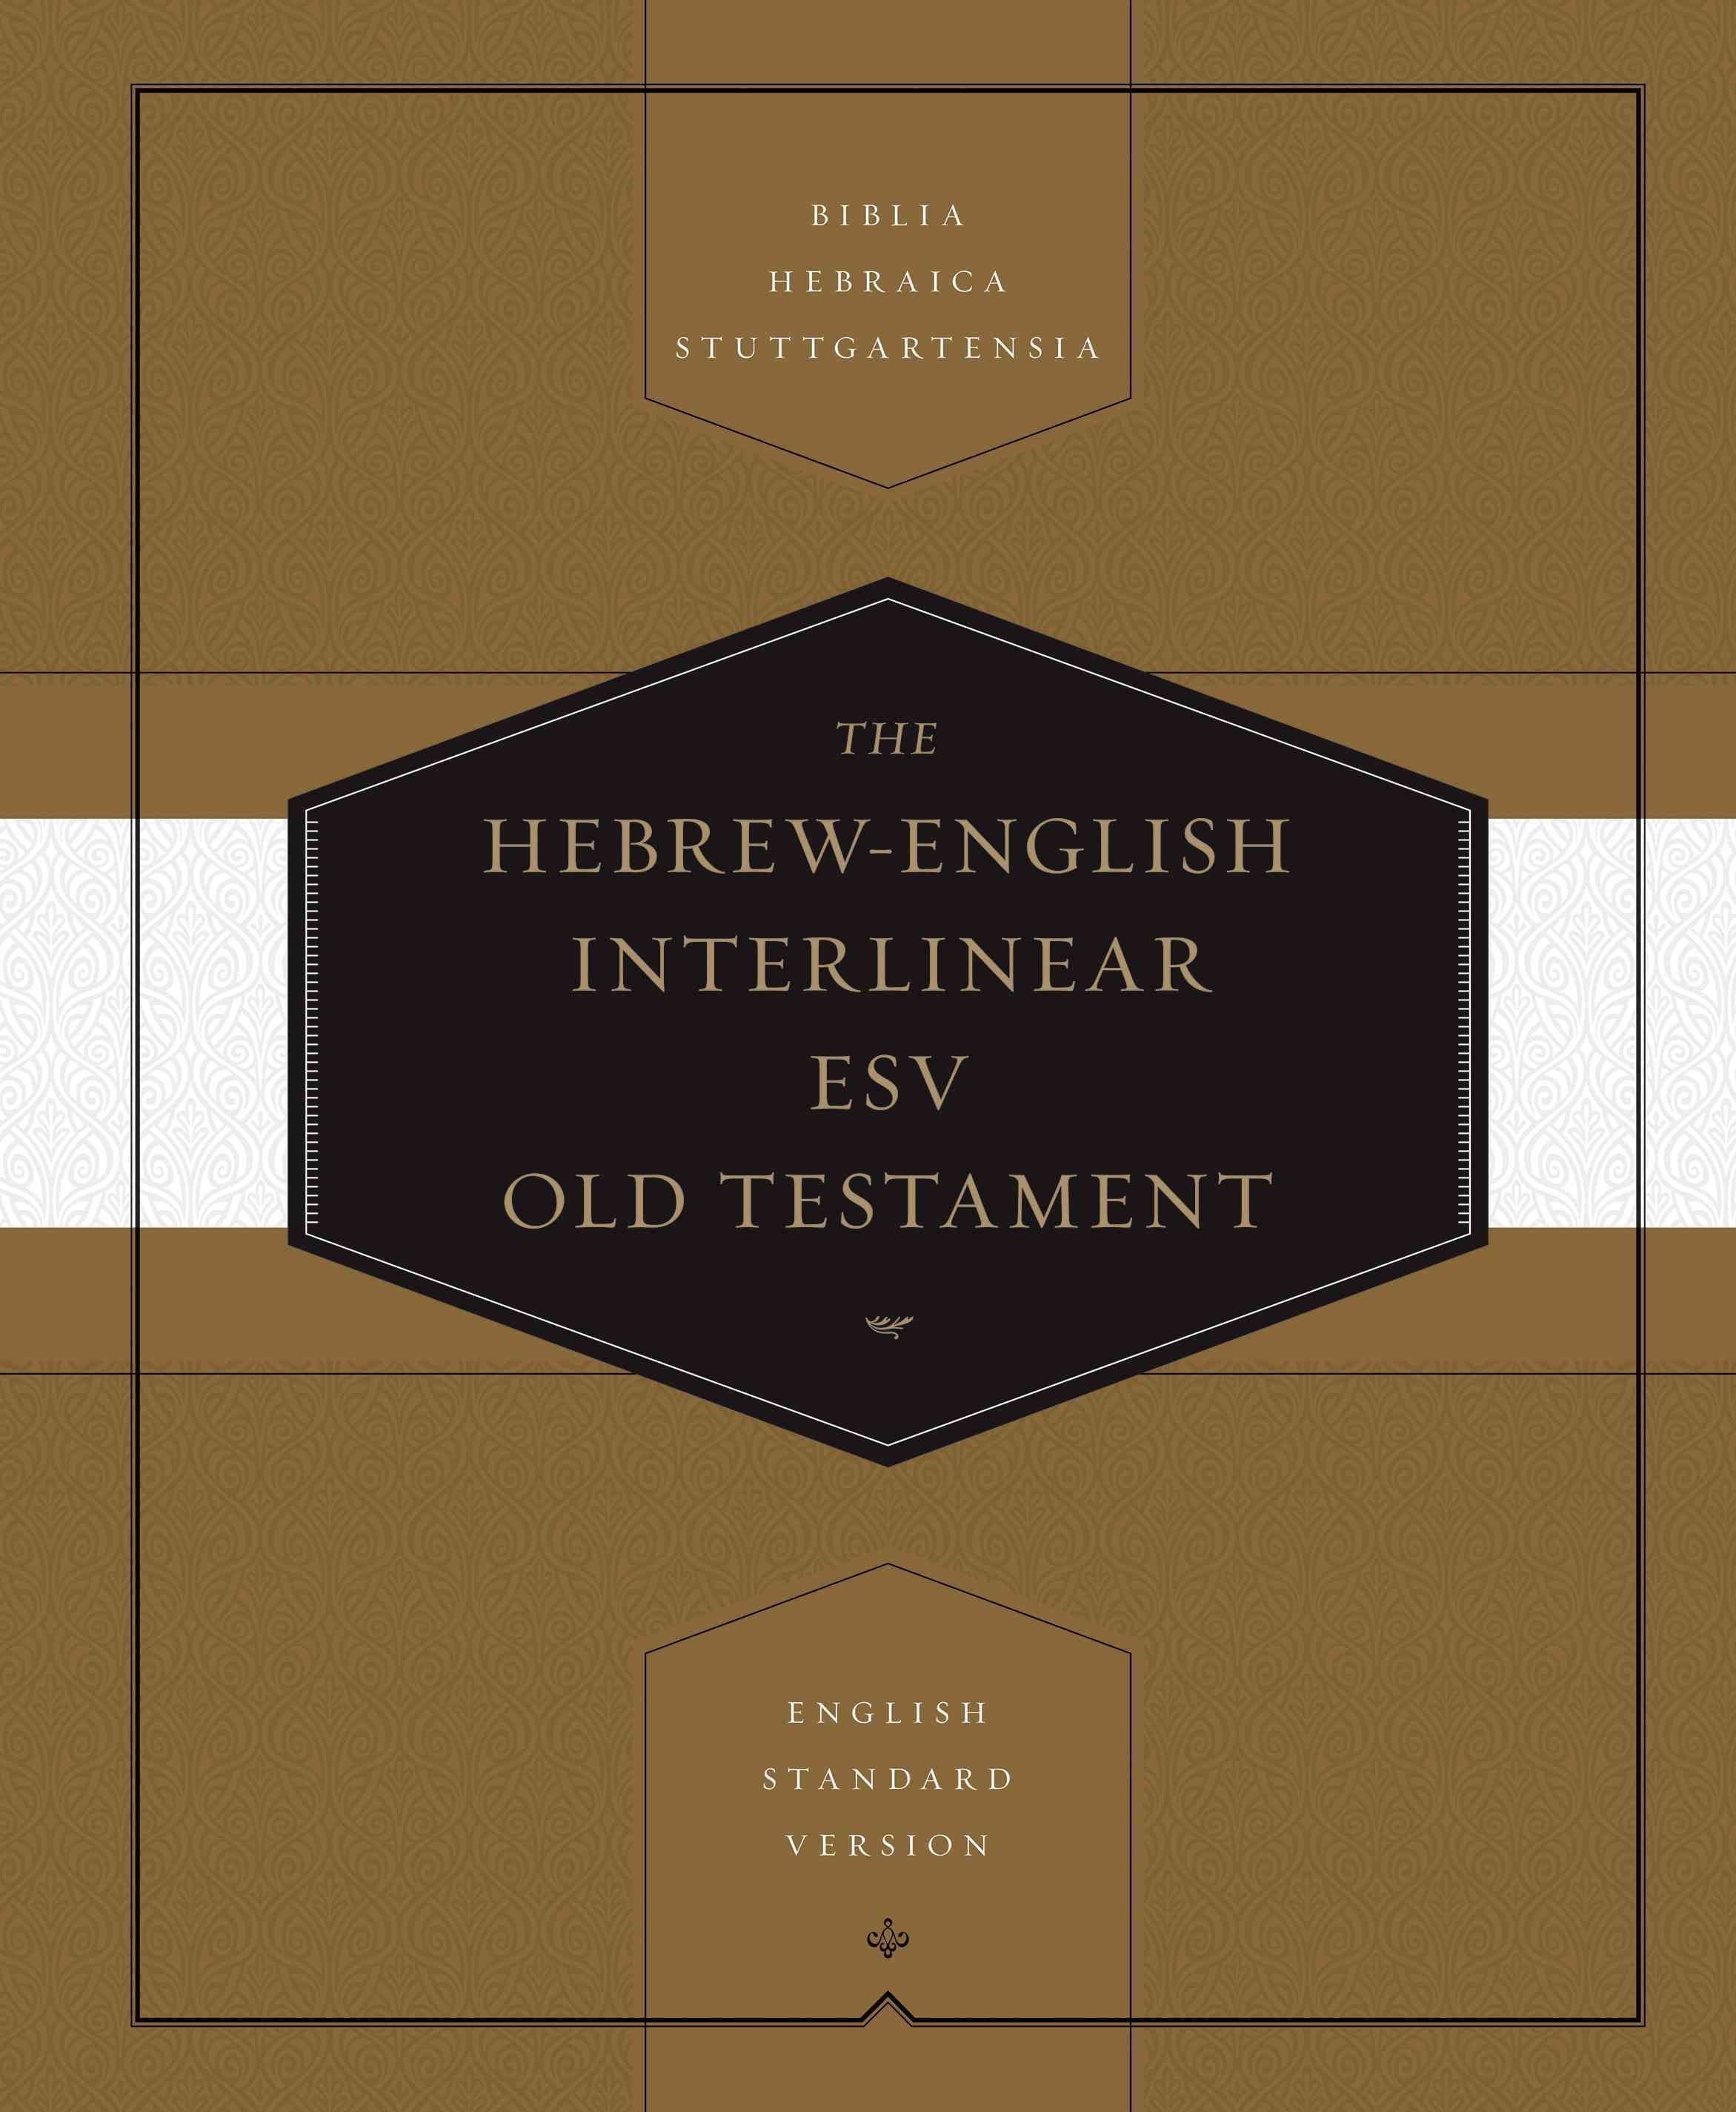 Hebrew-English Interlinear ESV Old Testament: Biblia Hebraica Stuttgartensia and English Standard Version (ESV)